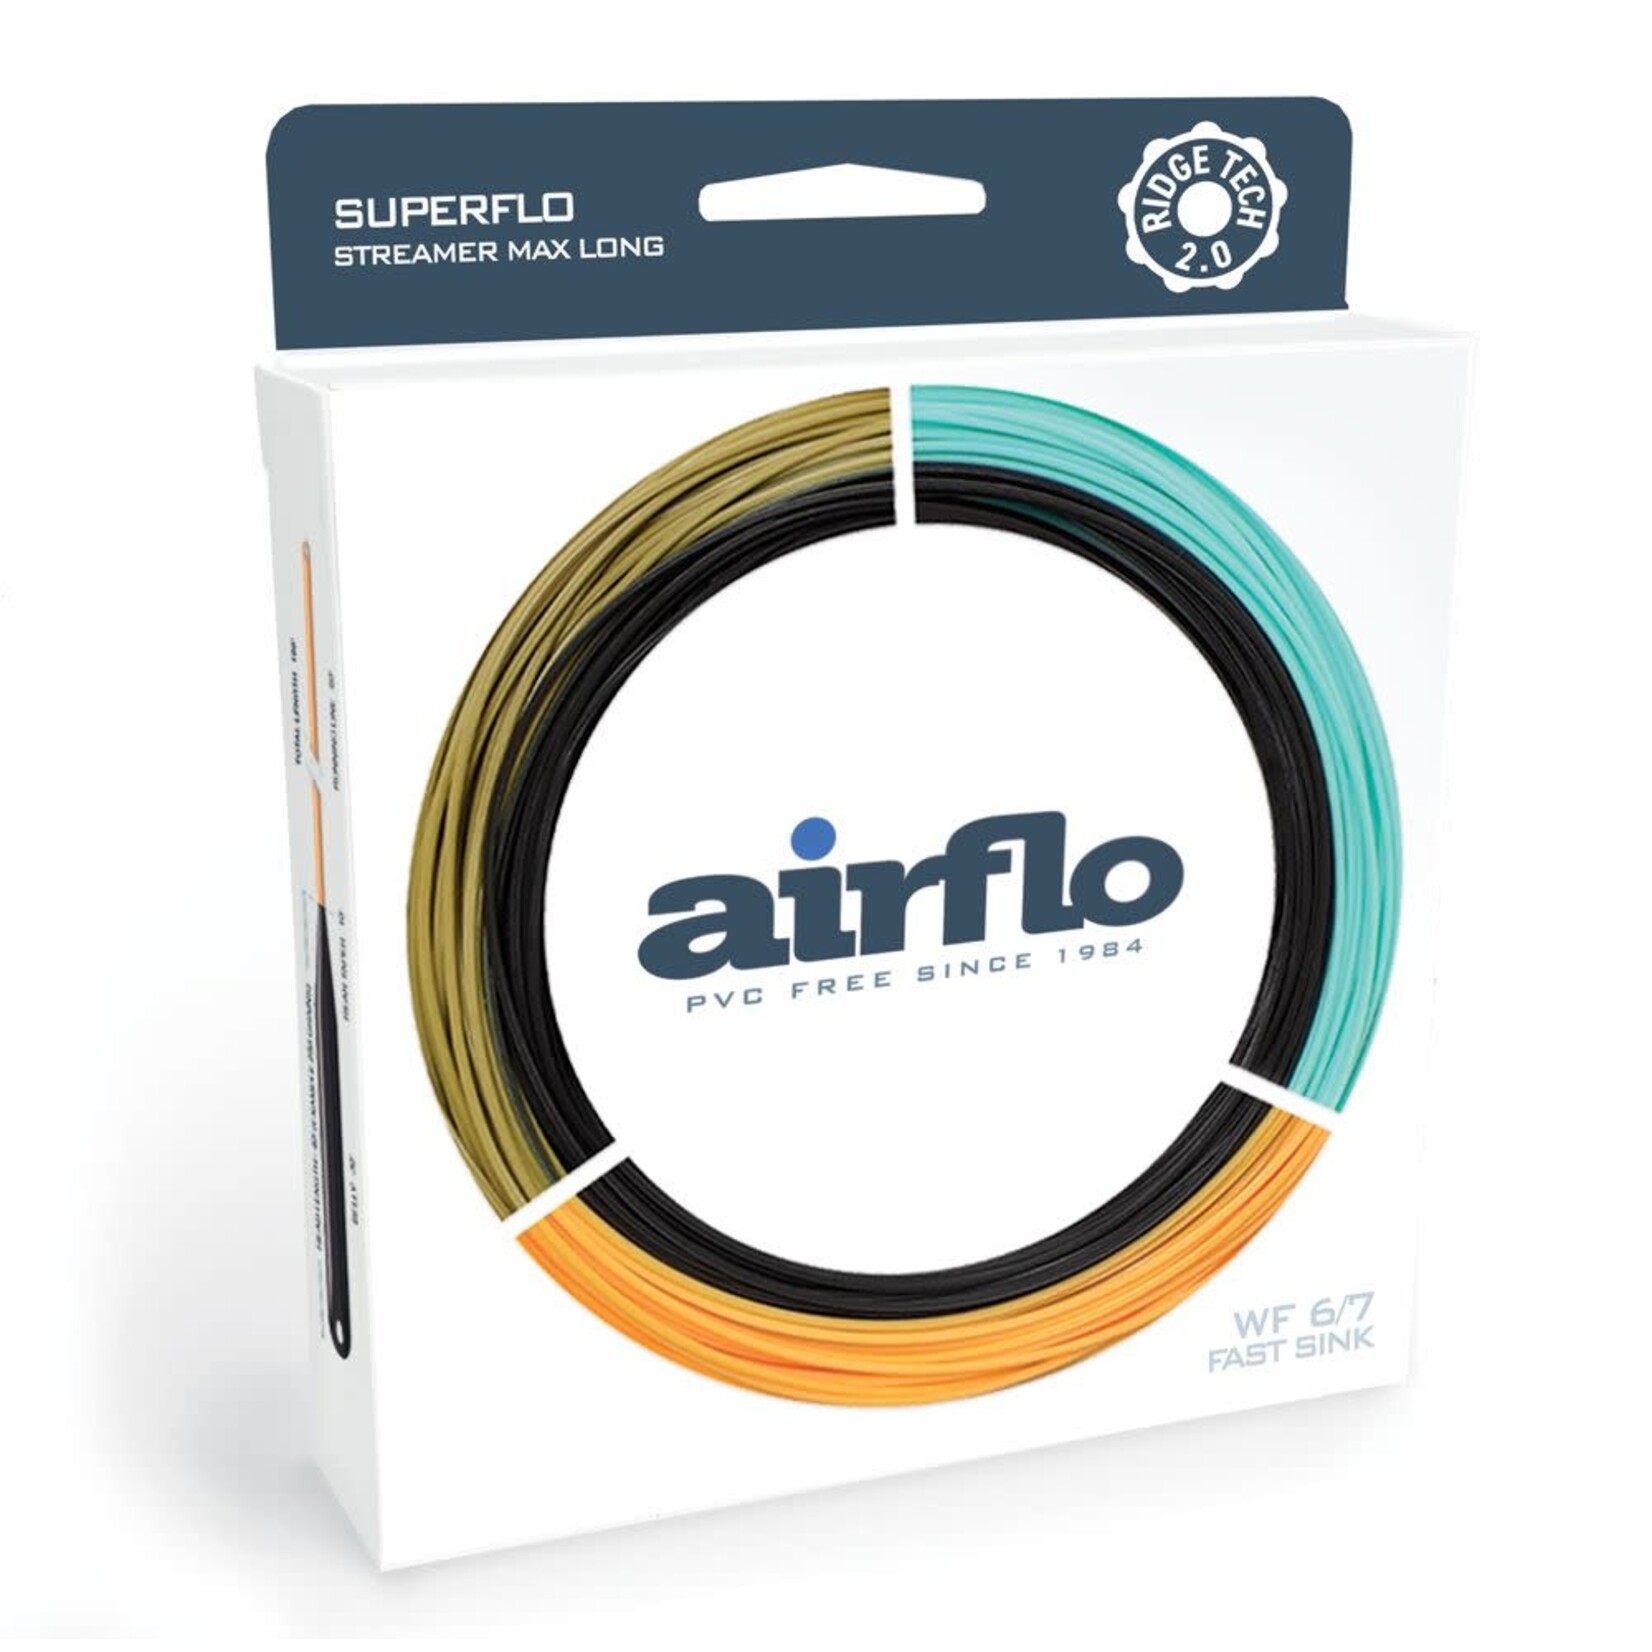 Airflo SUPERFLO RIDGE 2.0 KELLY GALLOUP STREAMER MAX LONG